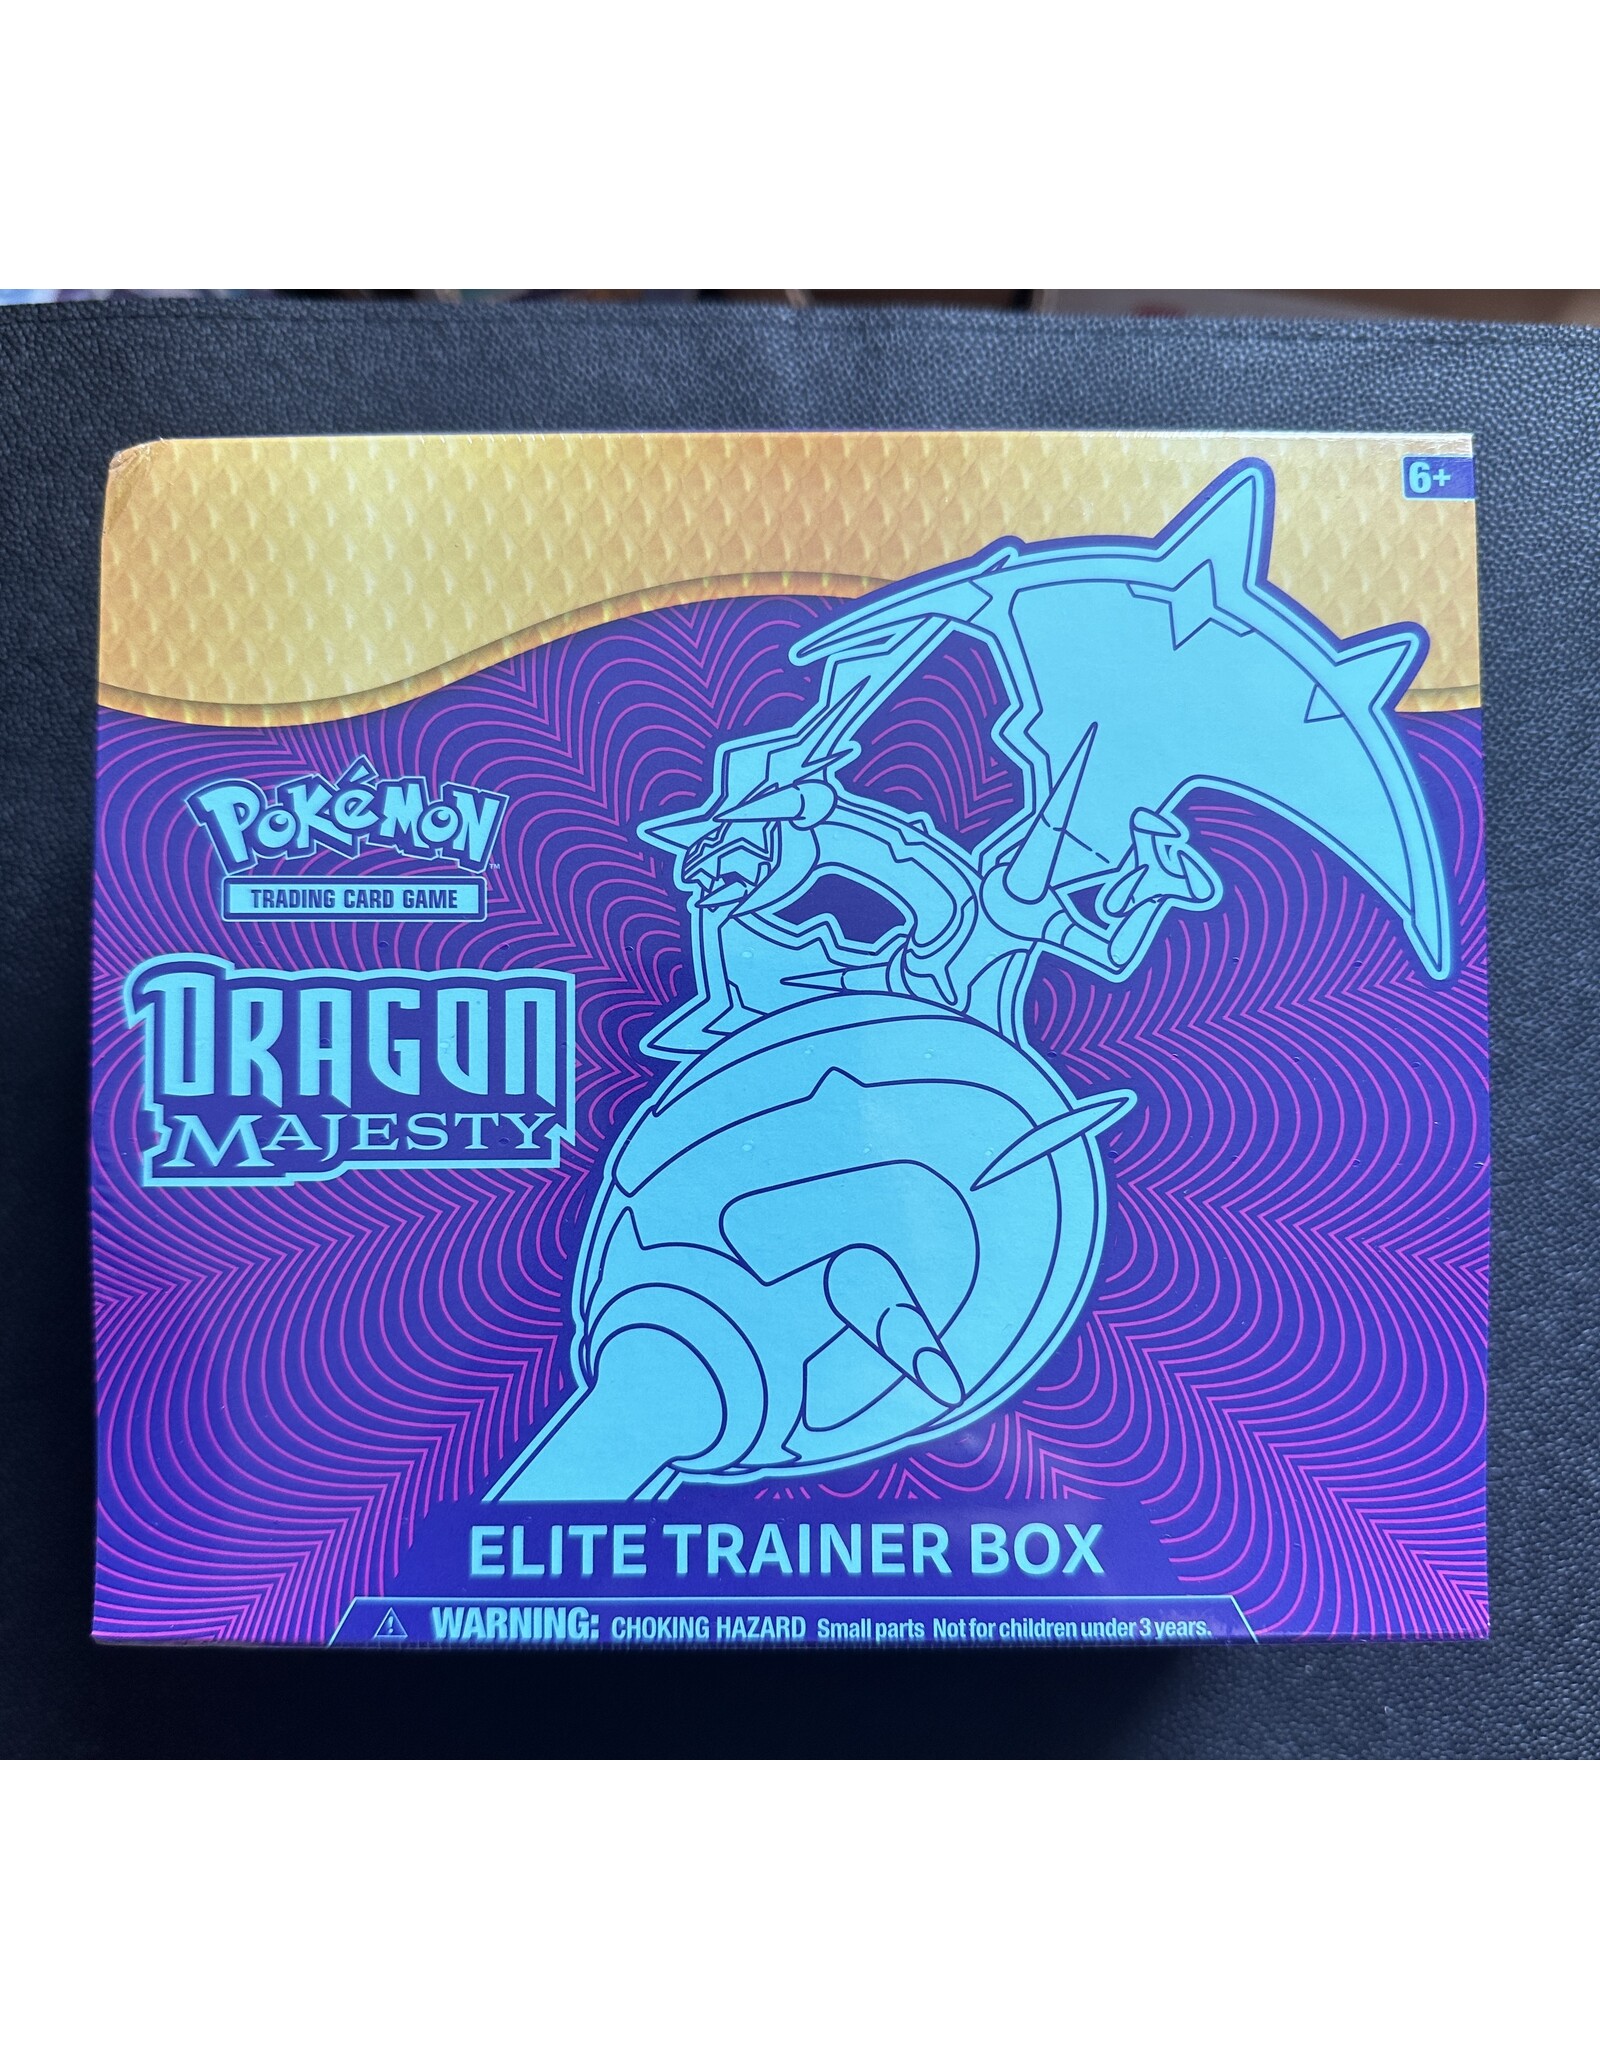 DAMAGED Dragon Majesty Elite Trainer Box